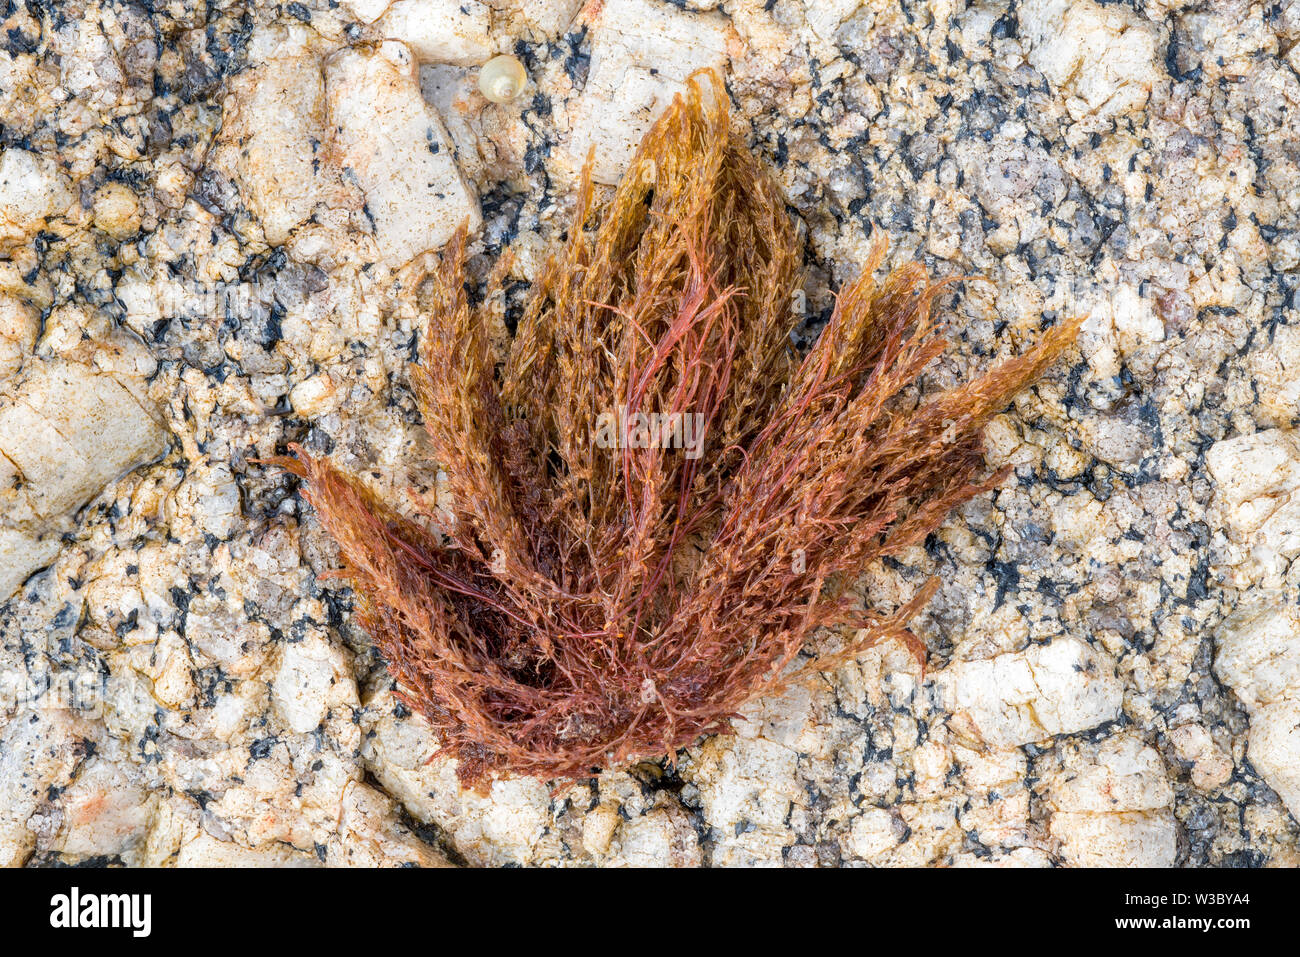 Bornetia secundiflora, alga roja arrastrado en la playa rocosa Foto de stock